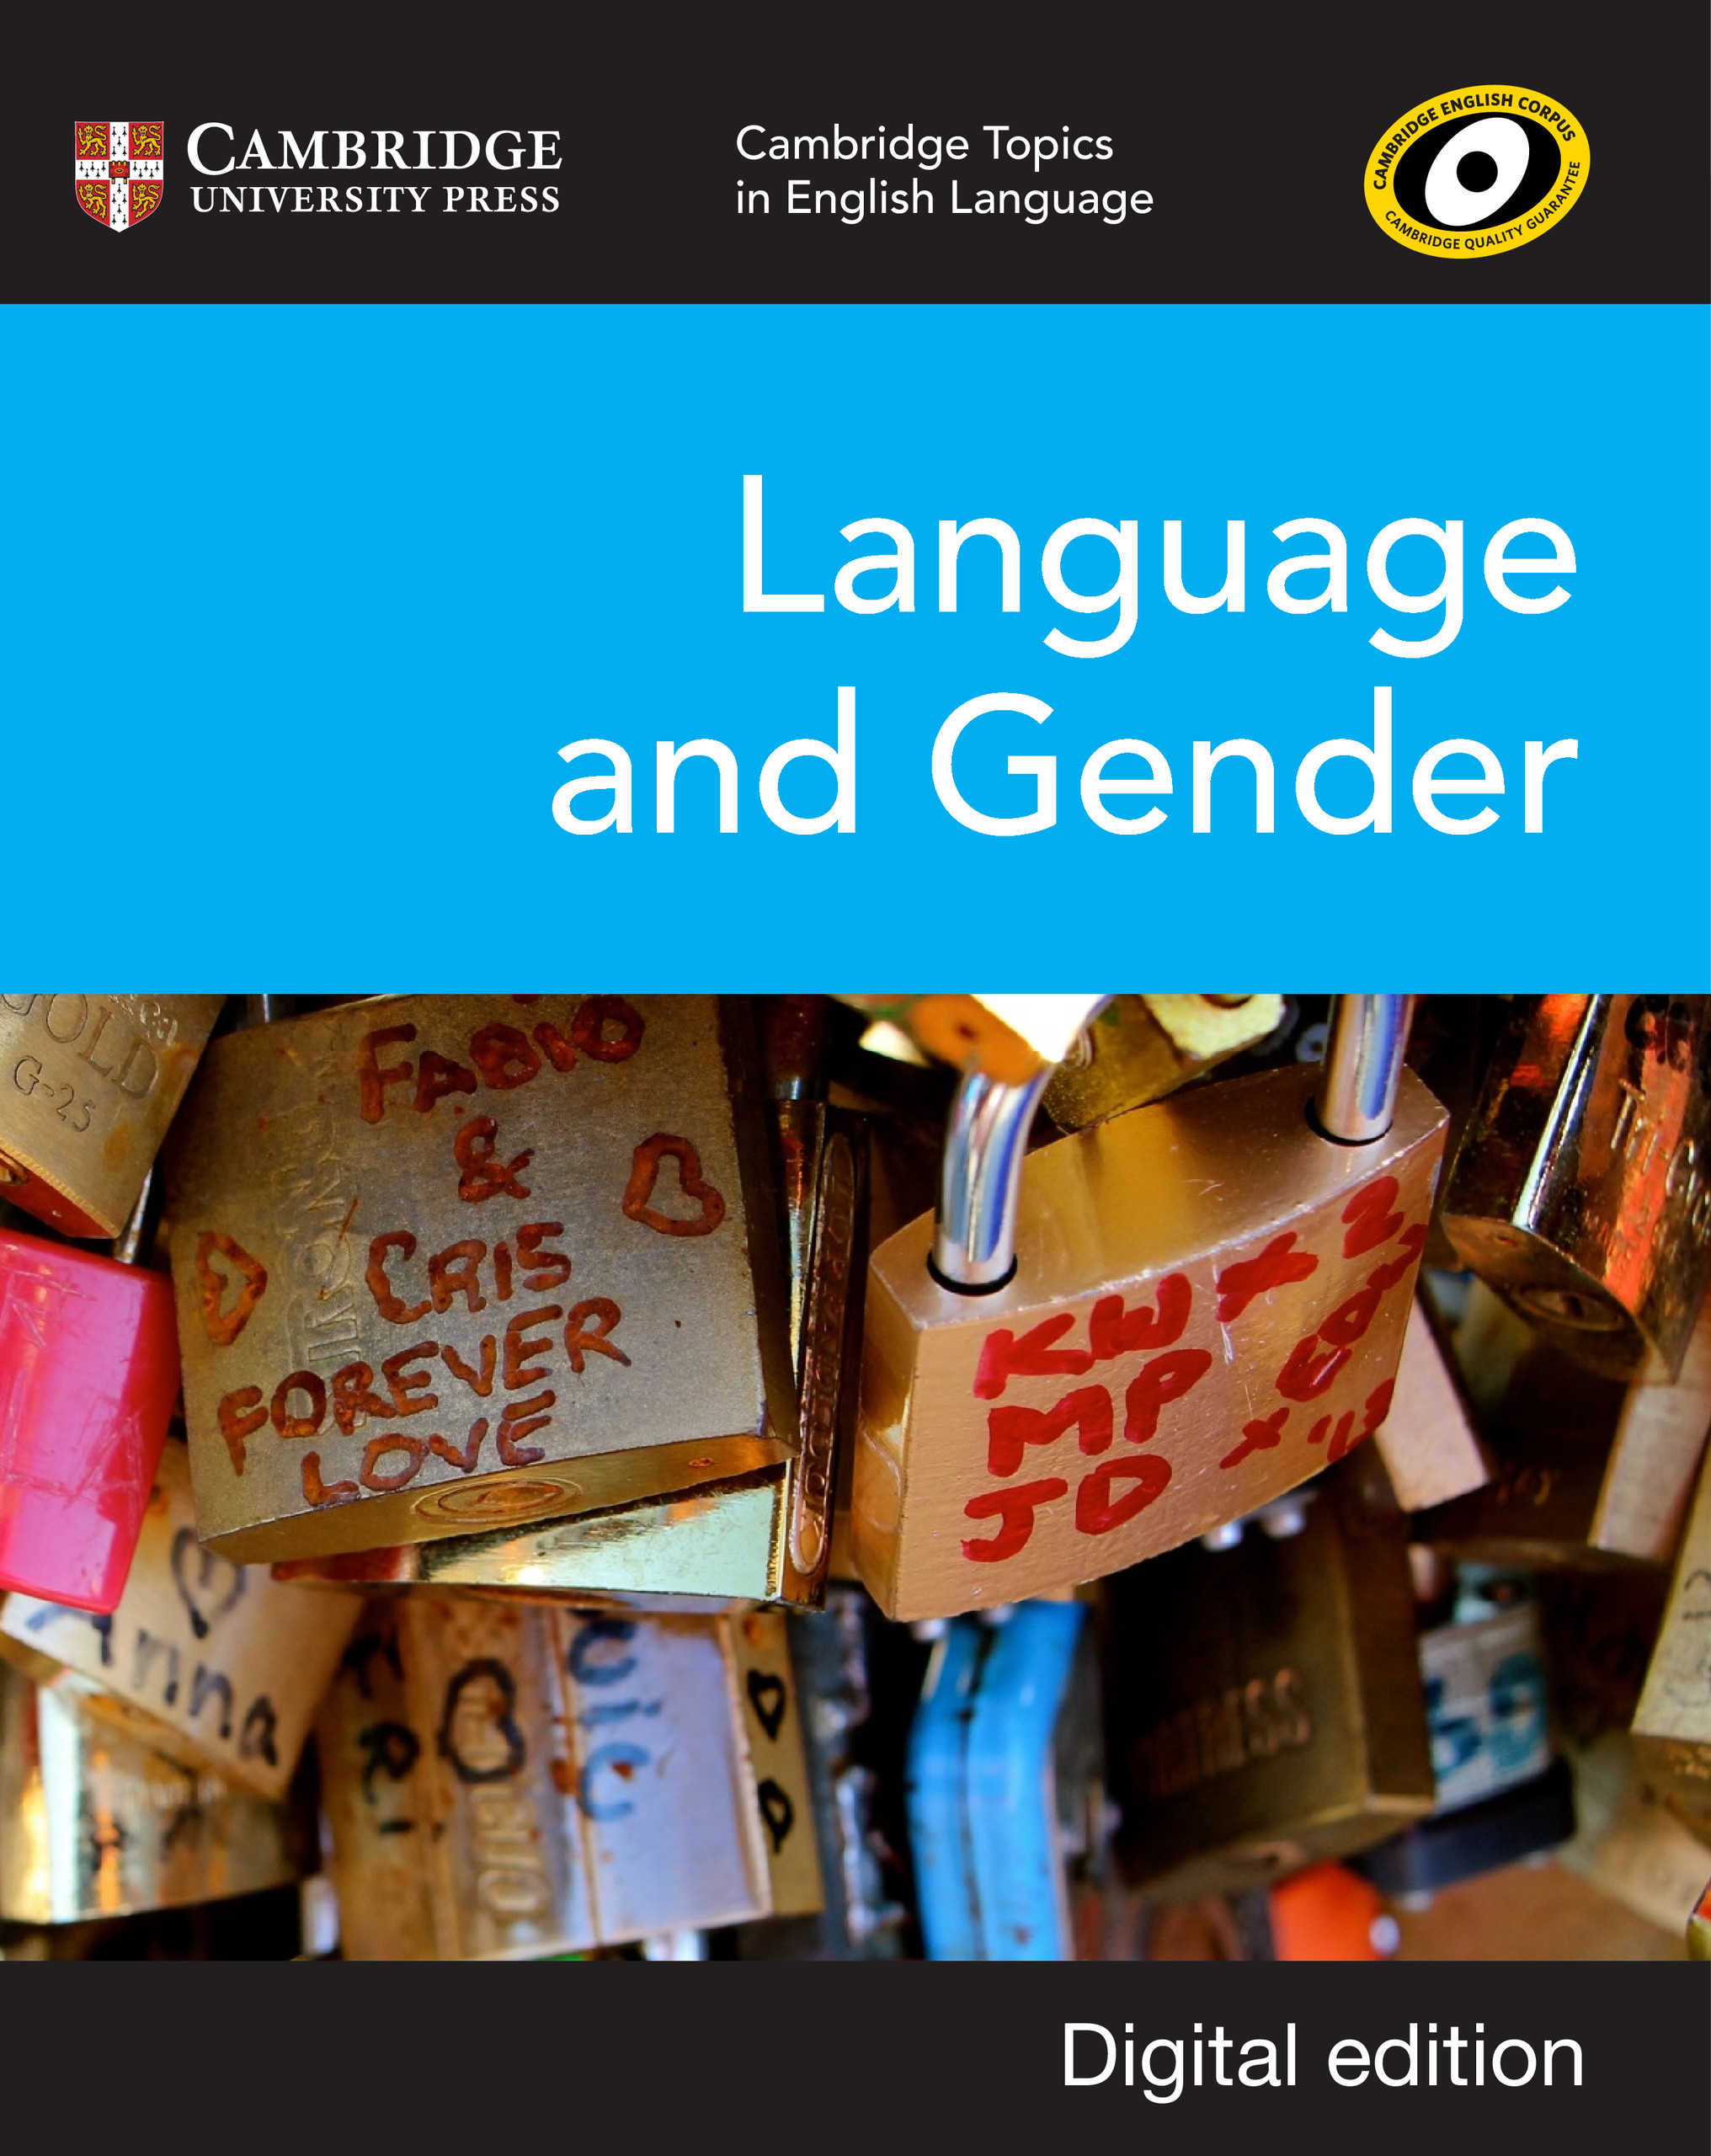 Cambridge Topics in English Language: Language and Gender